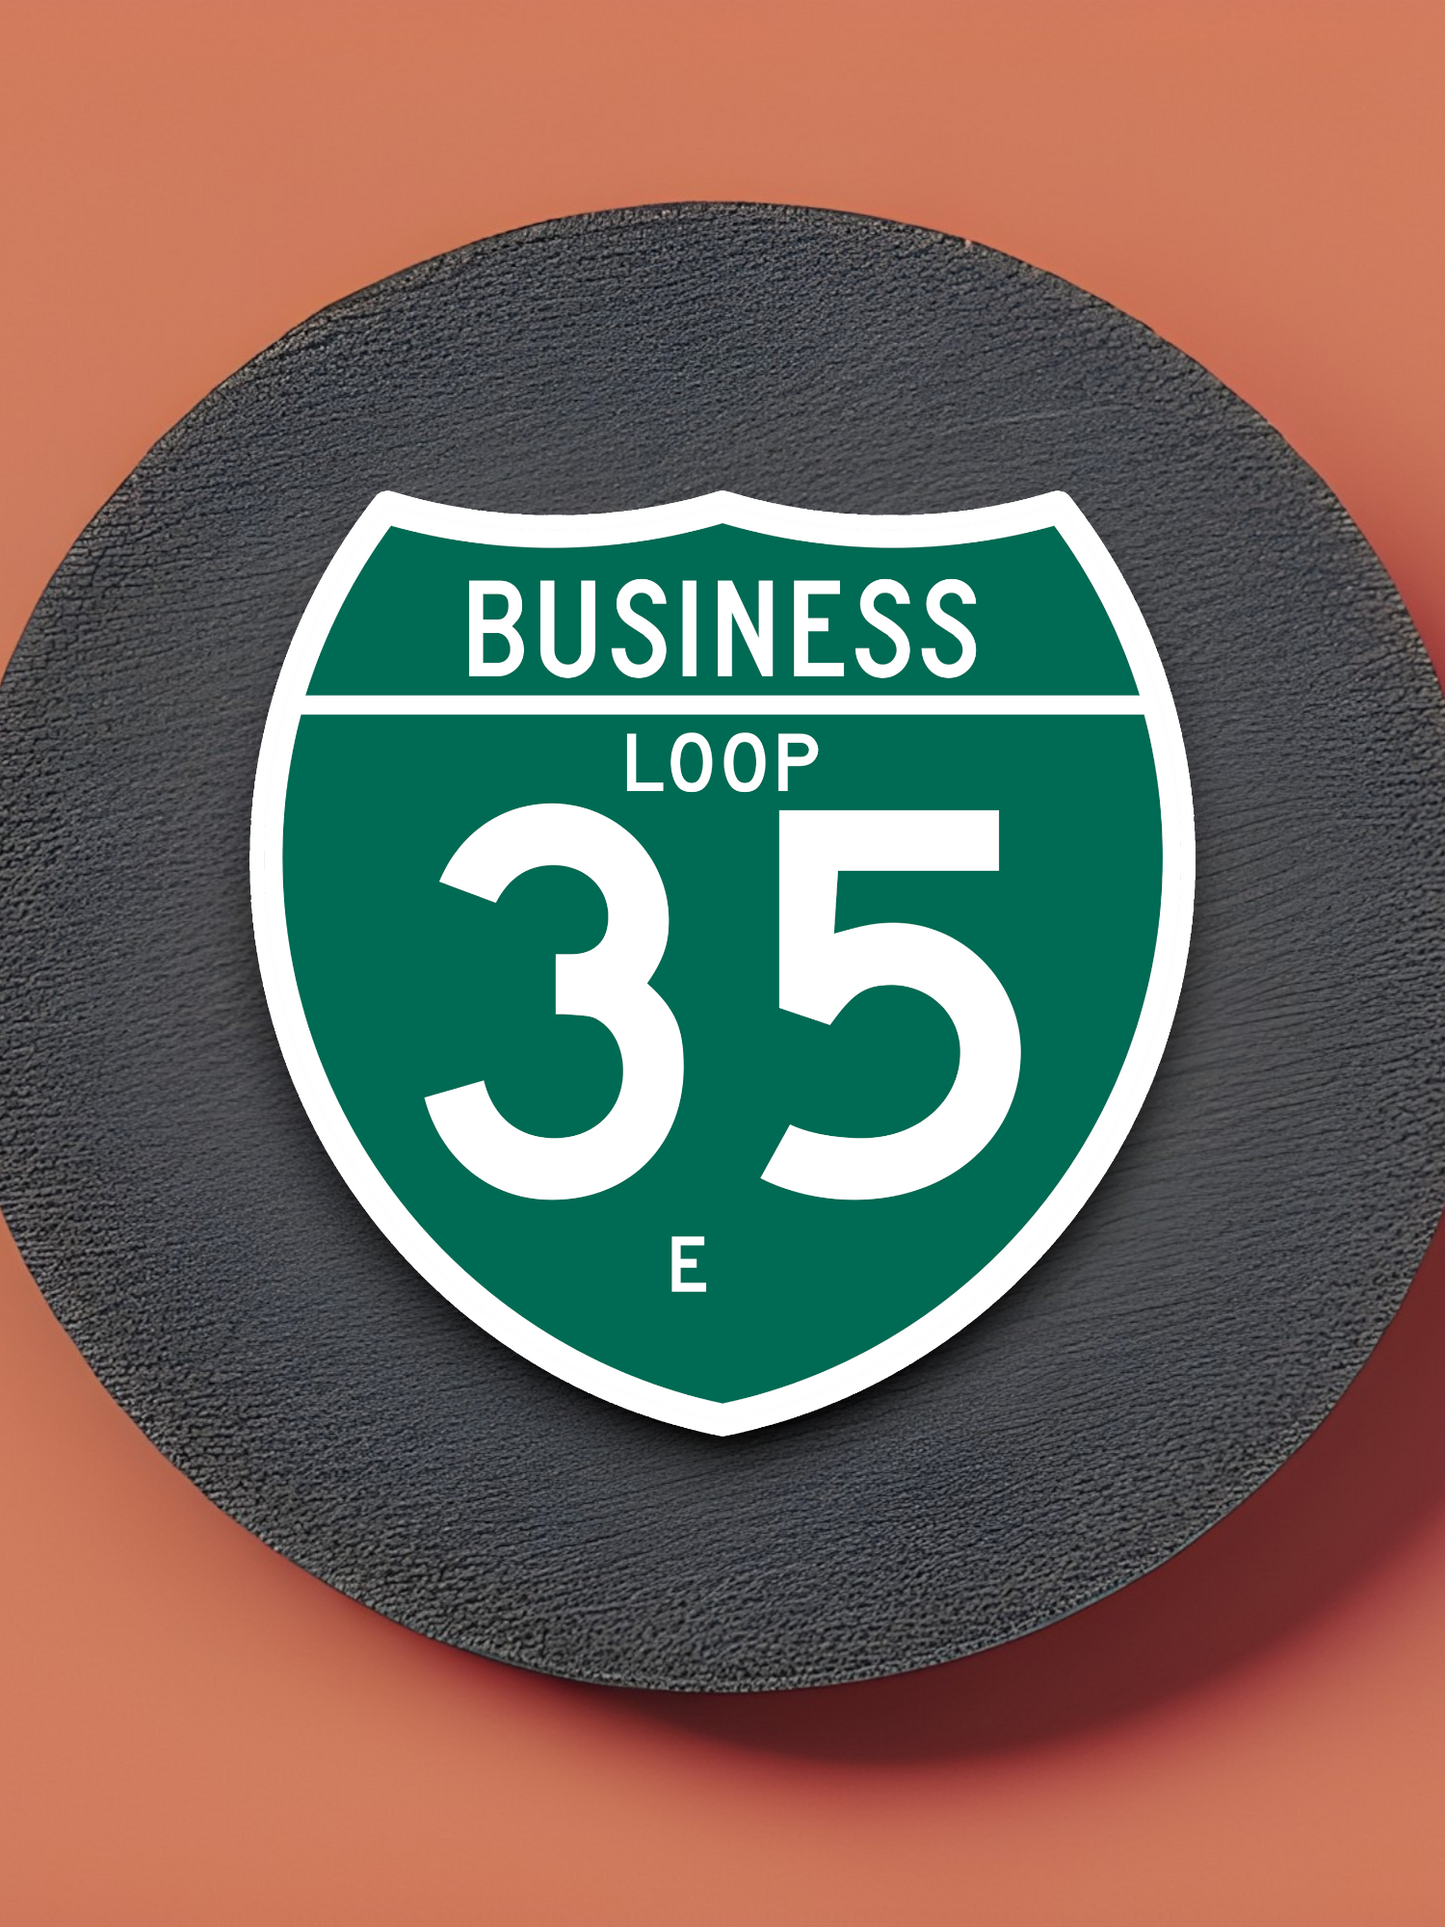 Business Spur Interstate 35-E Texas Road Sign Sticker